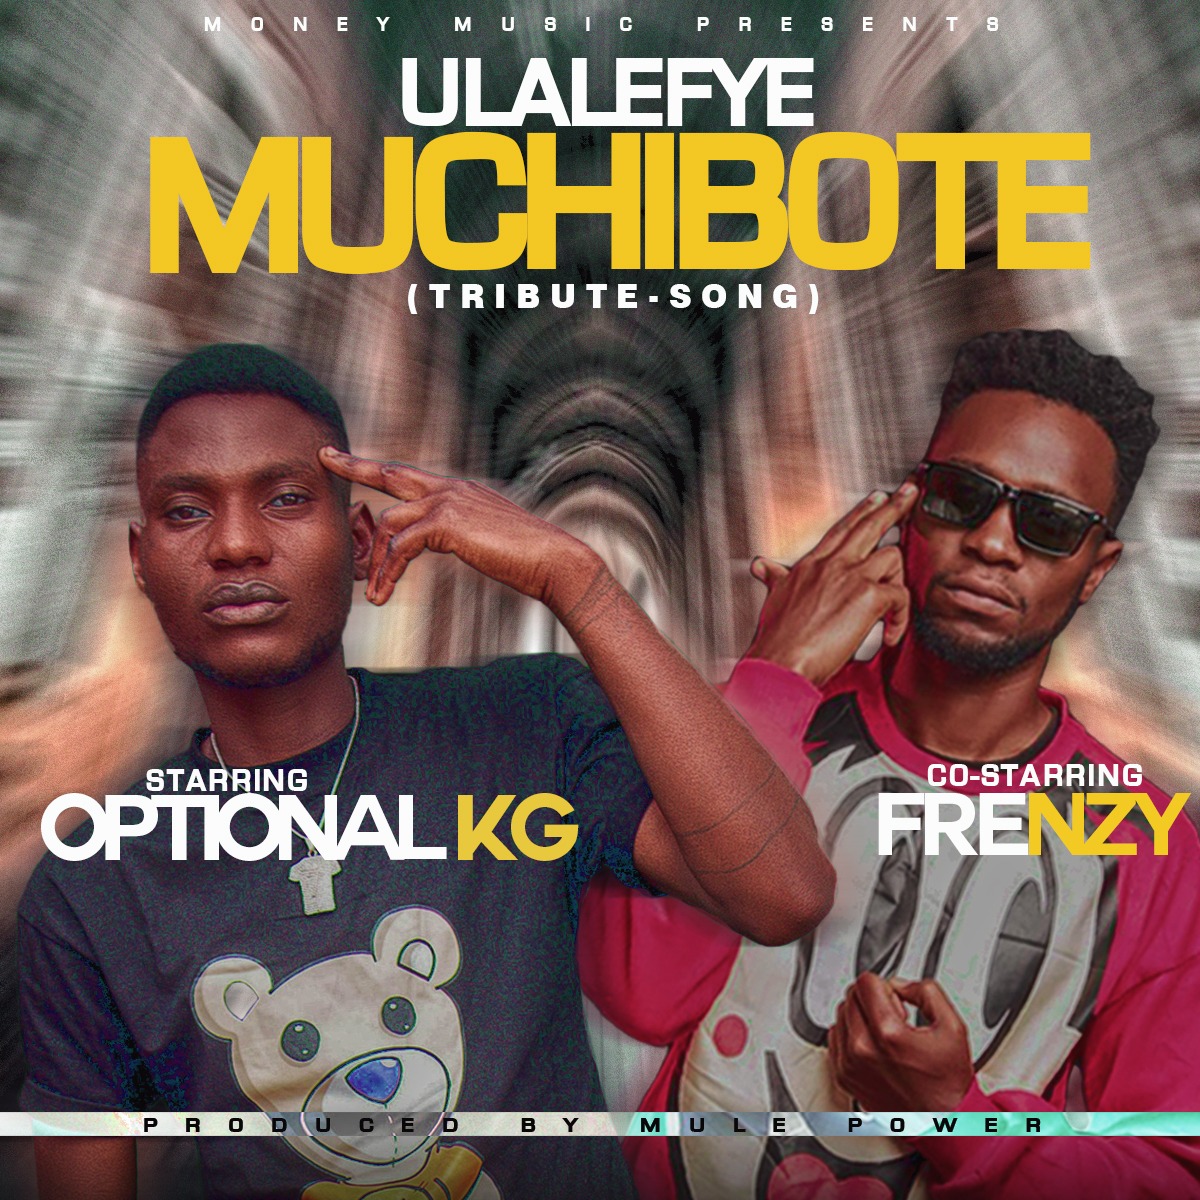 Optional KG ft. Frenzy - Ulalefye Muchibote (Tribute)